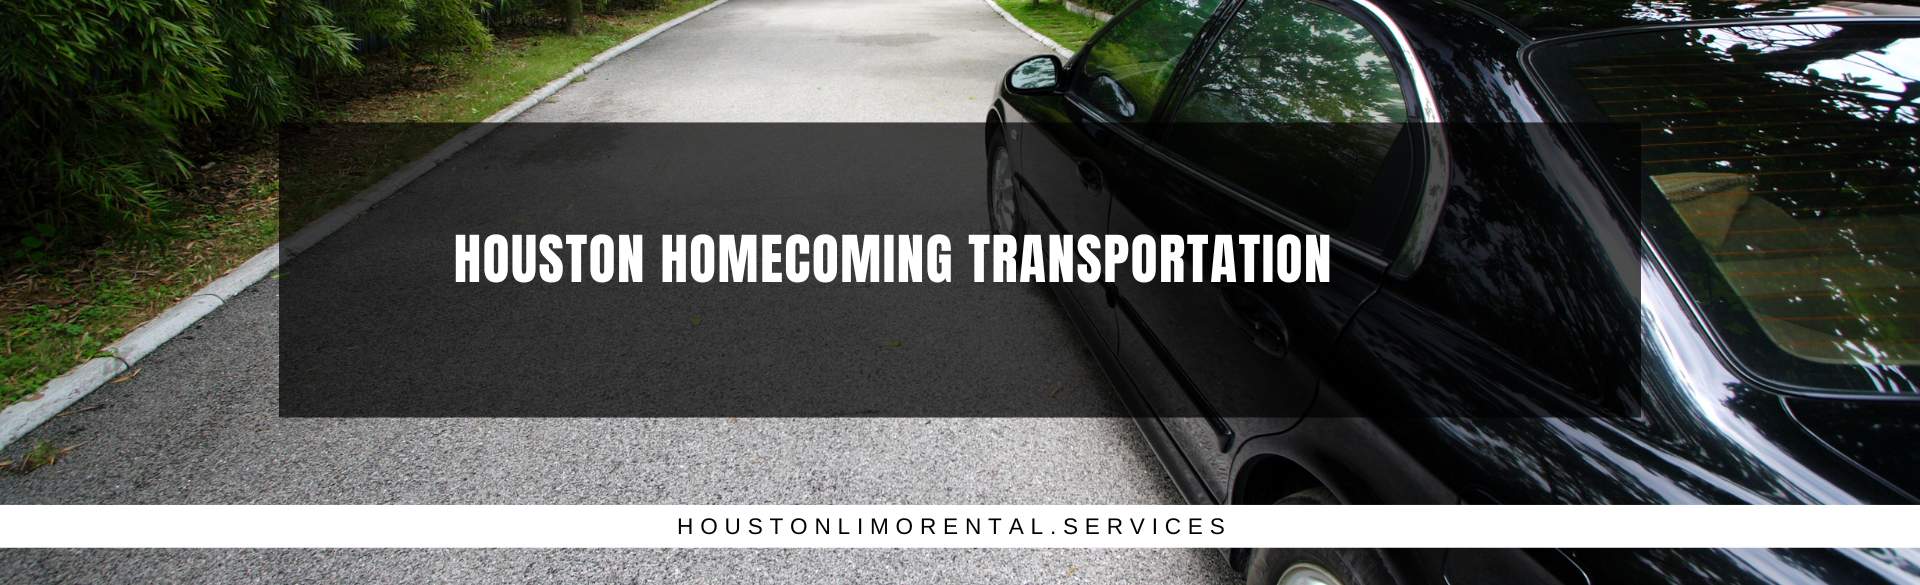 Houston Homecoming Transportation